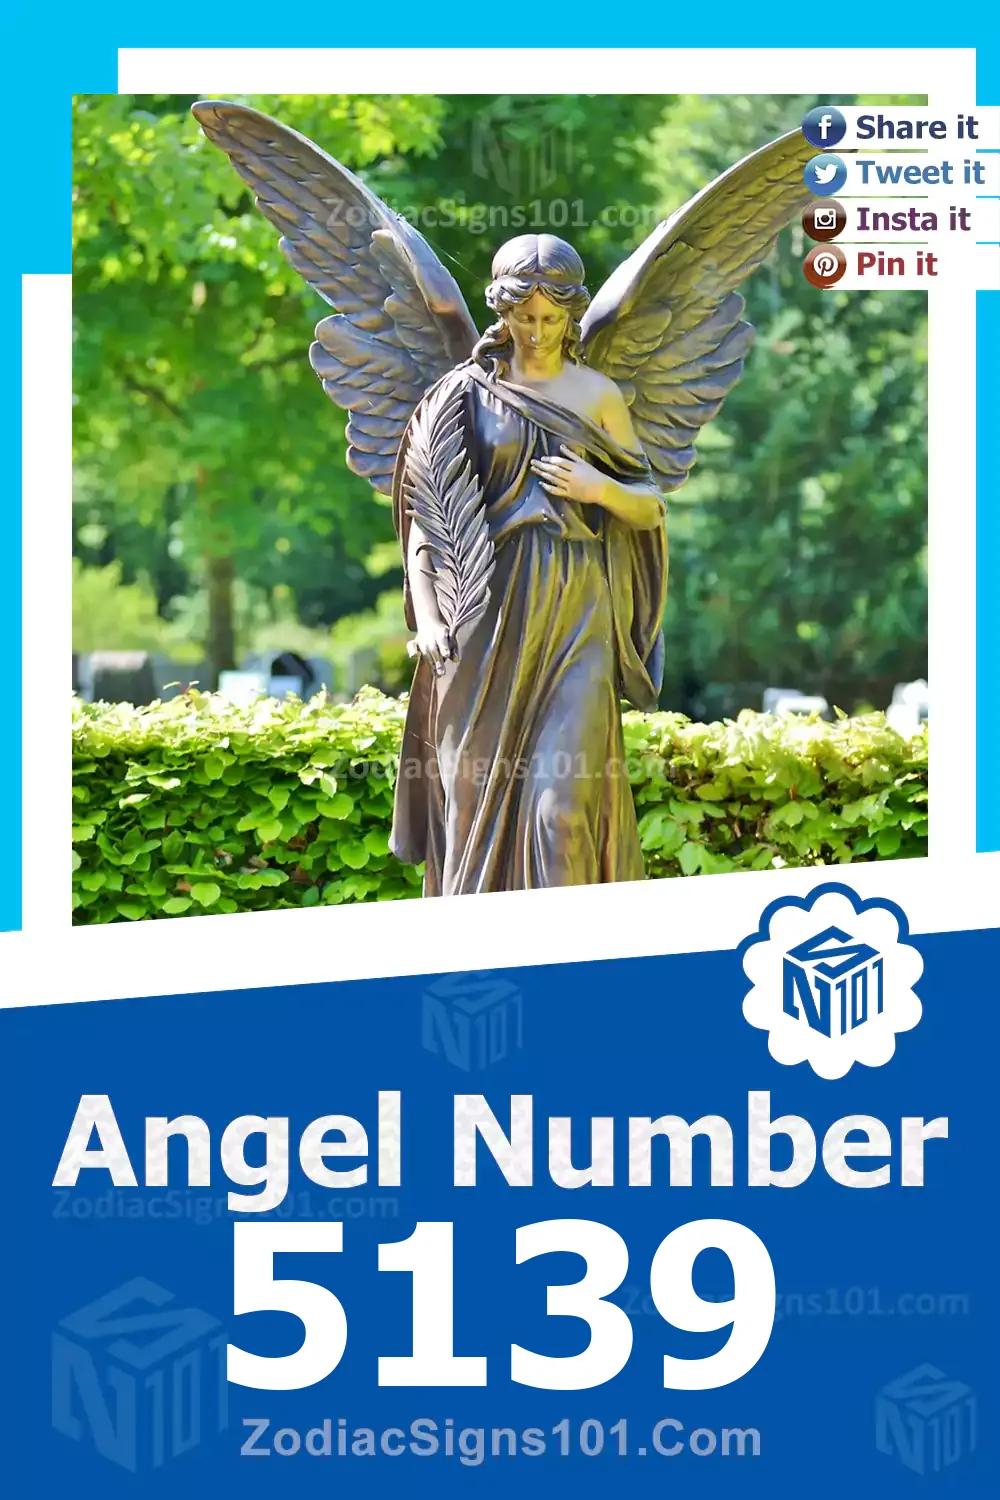 5139-Angel-Number-Meaning.jpg